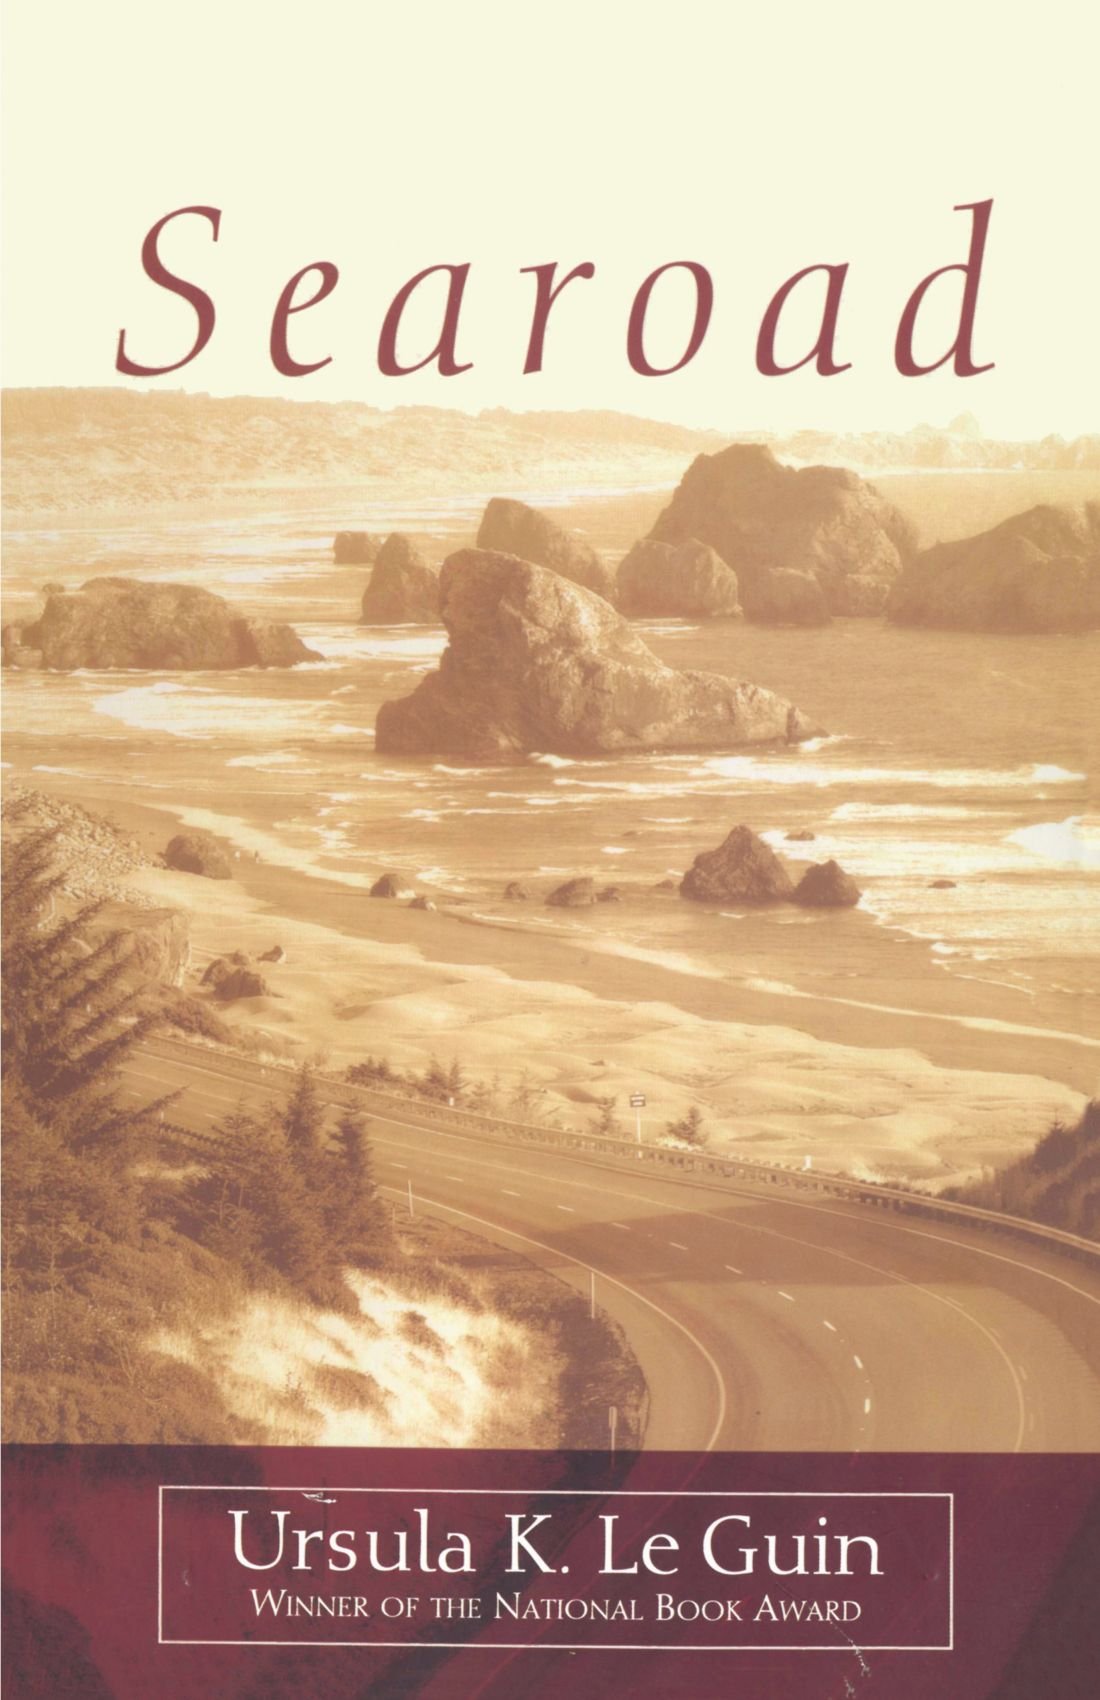 Searoad